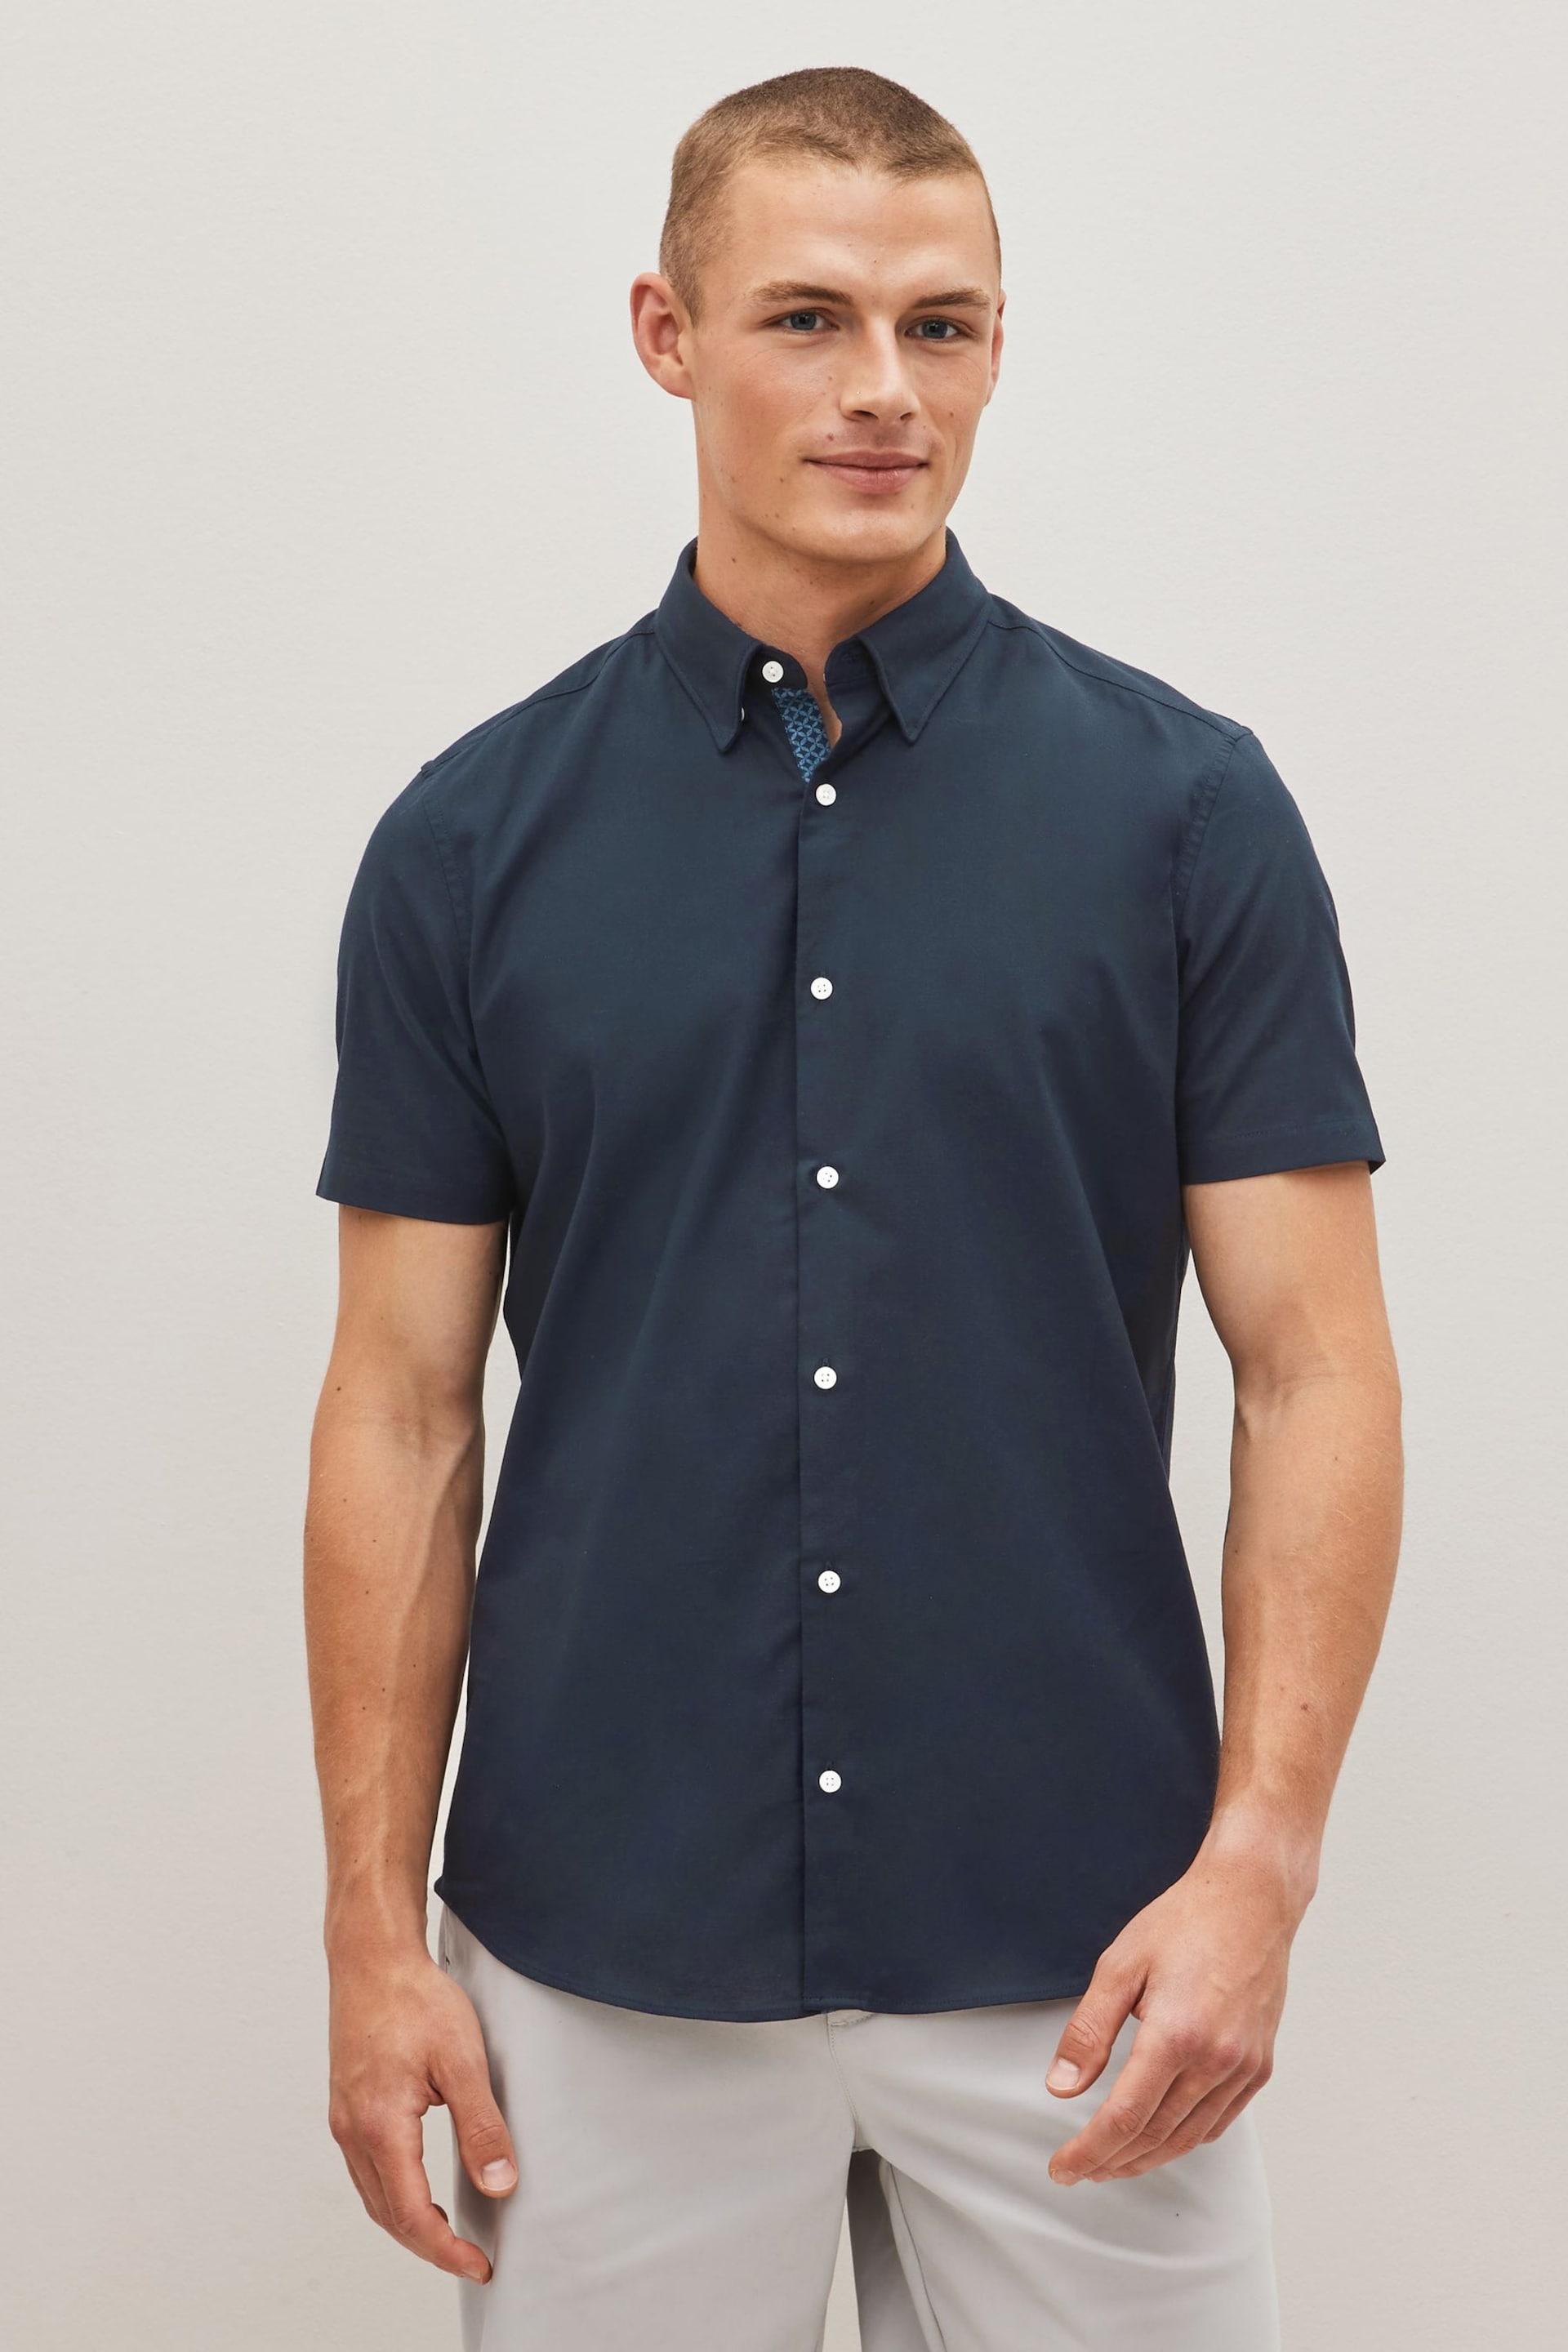 Navy Blue Stretch Oxford Short Sleeve Shirt - Image 1 of 7